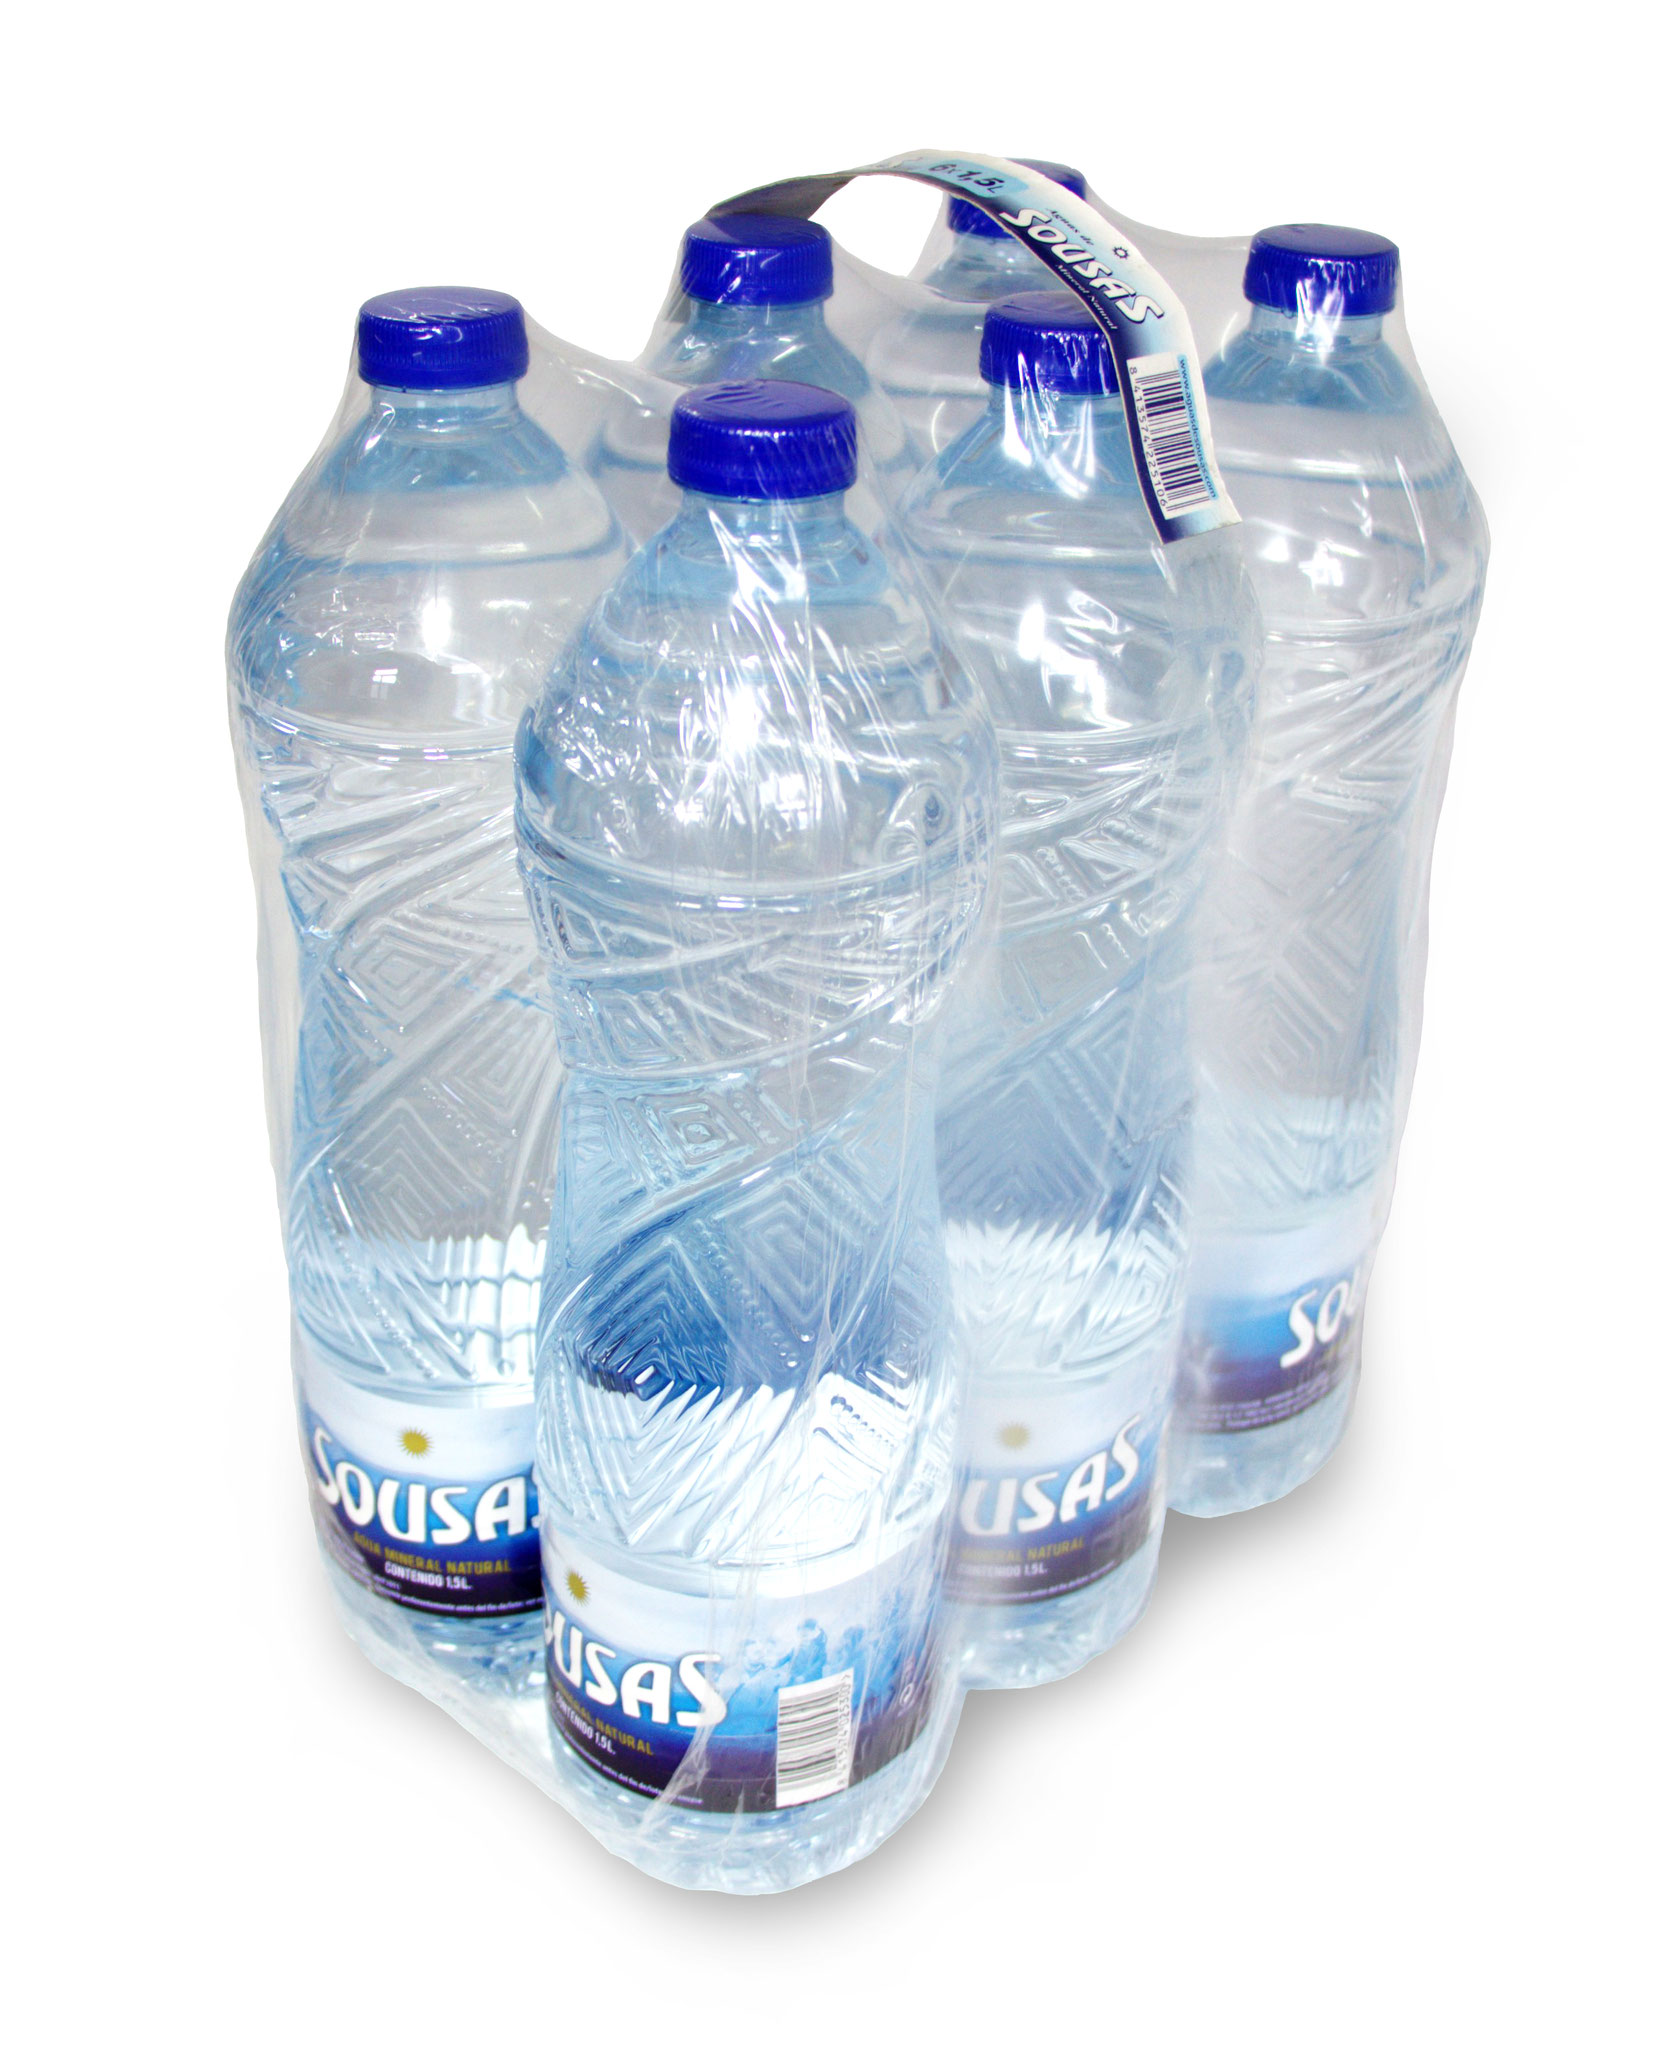 Sousas Agua mineral natural litros pack x6uds | Distribuciones Cantarero Sierra